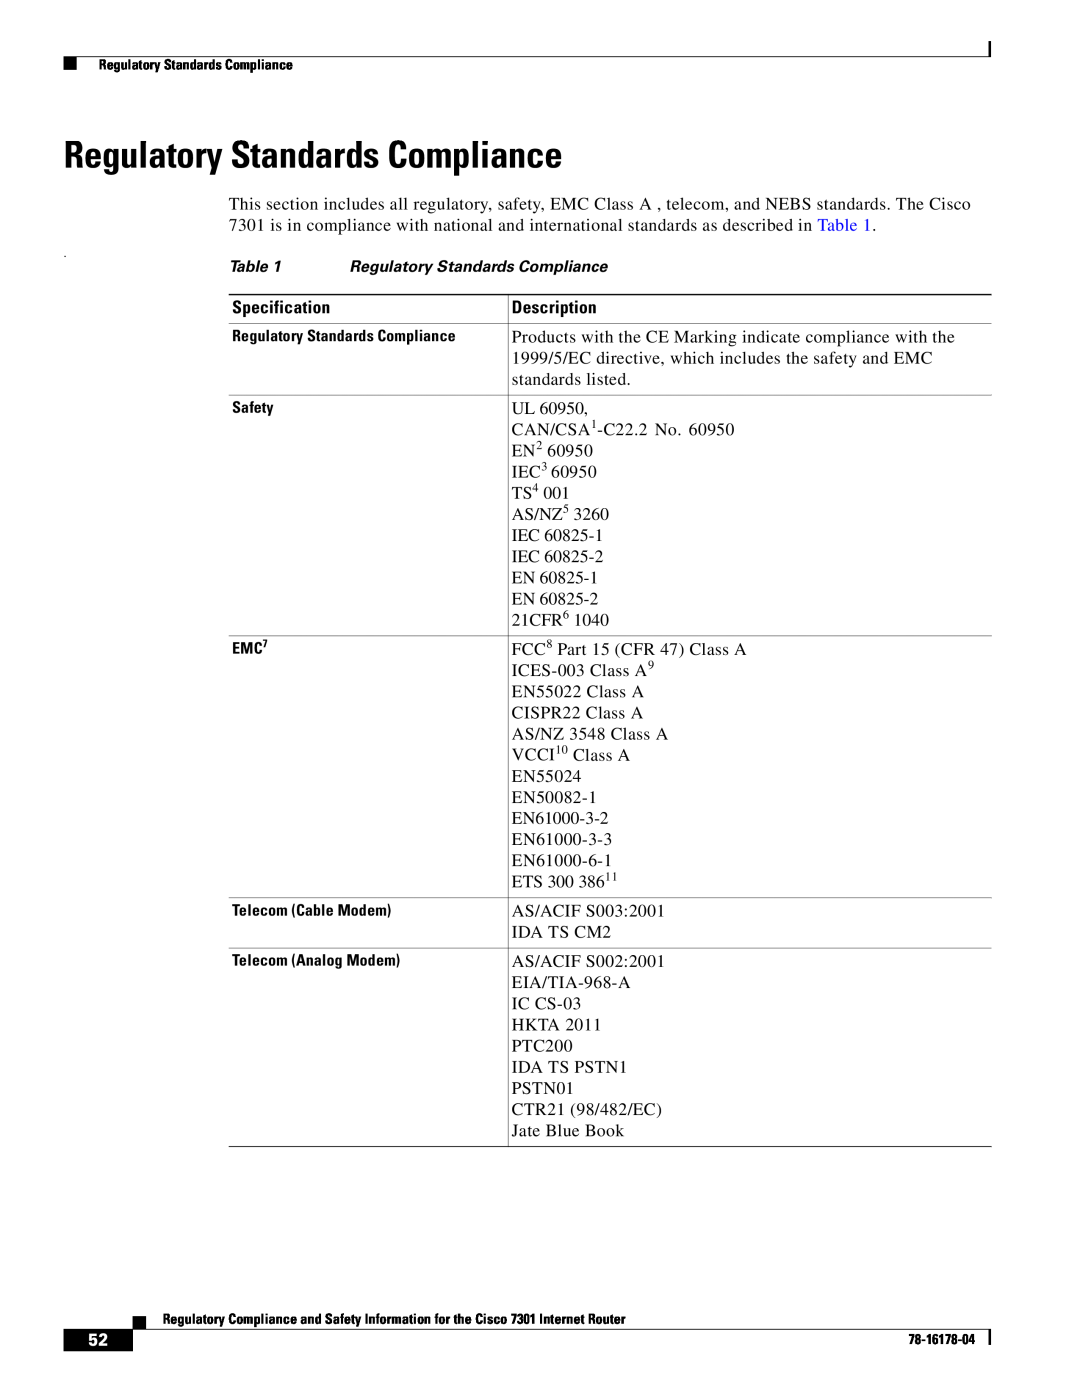 Cisco Systems CISCO7301 manual Regulatory Standards Compliance, Specification, Description 